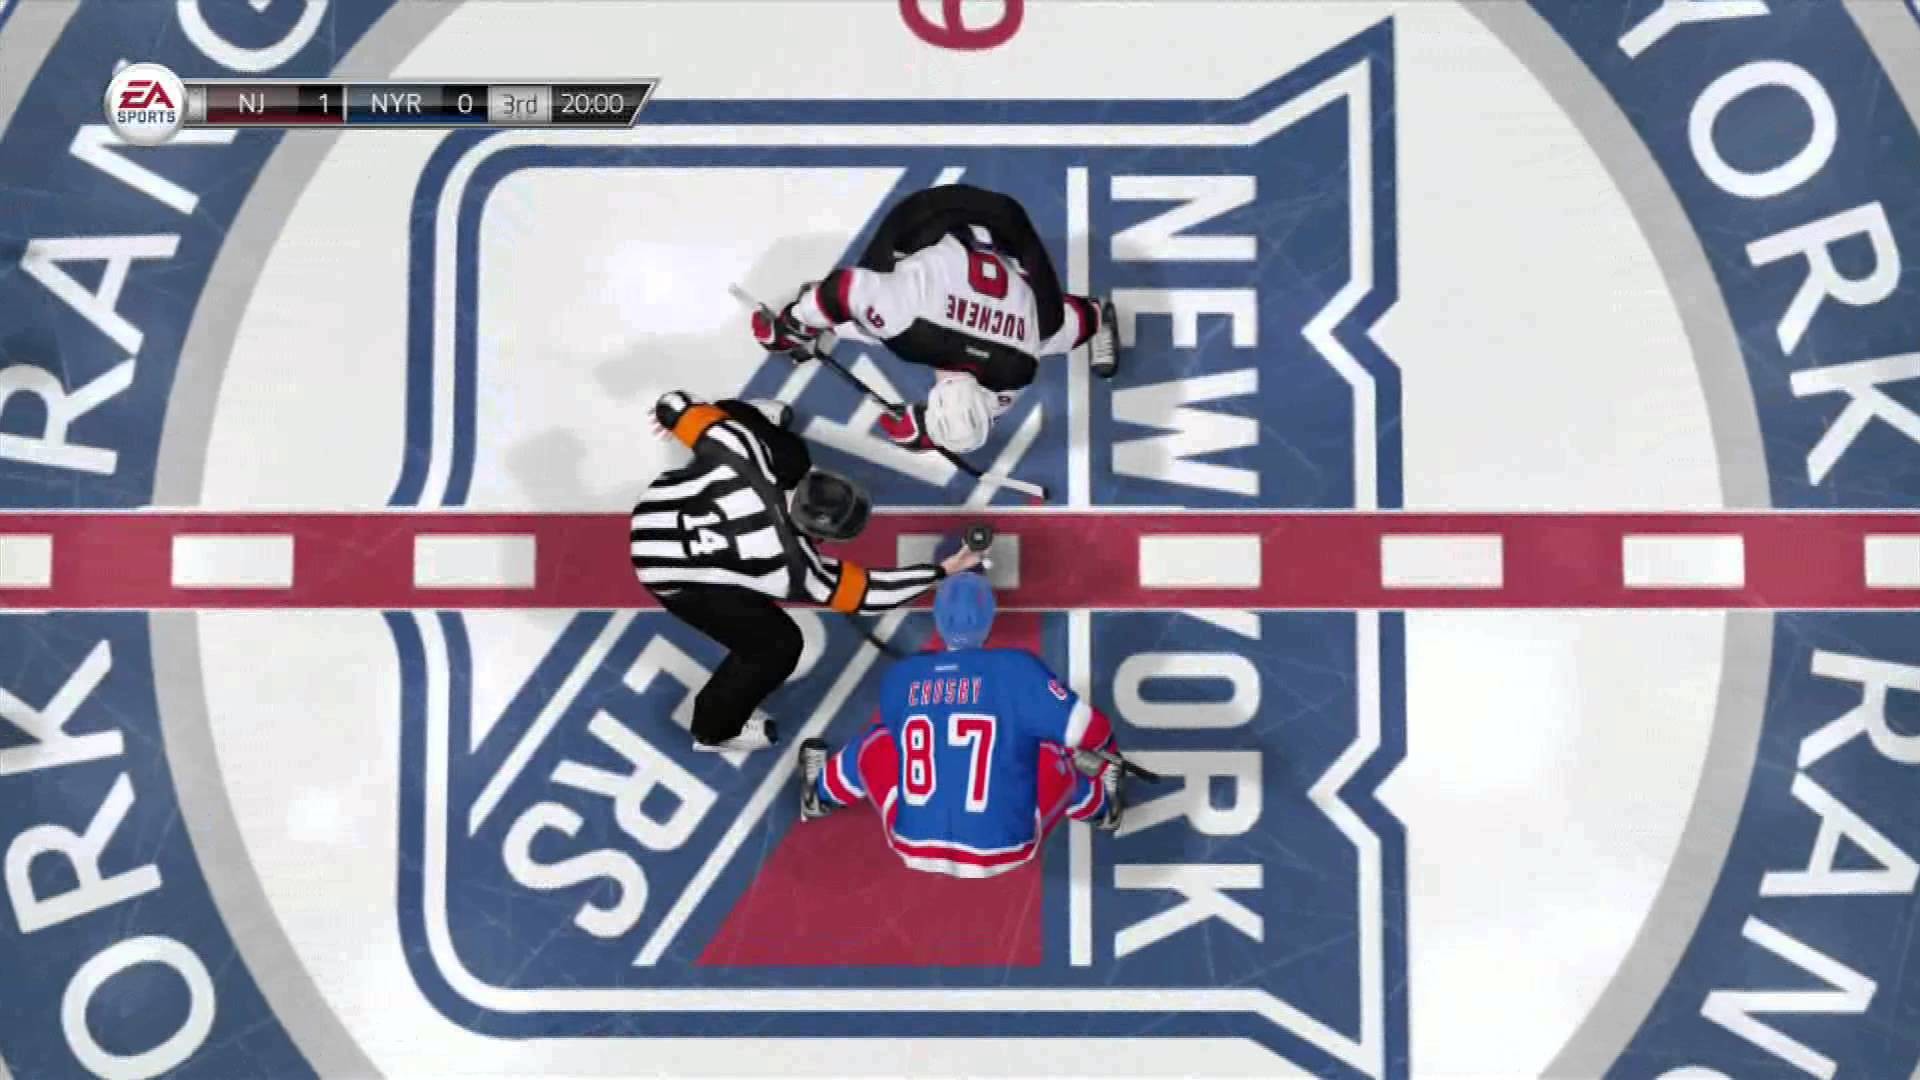 NEW YORK RANGERS hockey nhl (87) wallpaper, 1600x1200, 359489